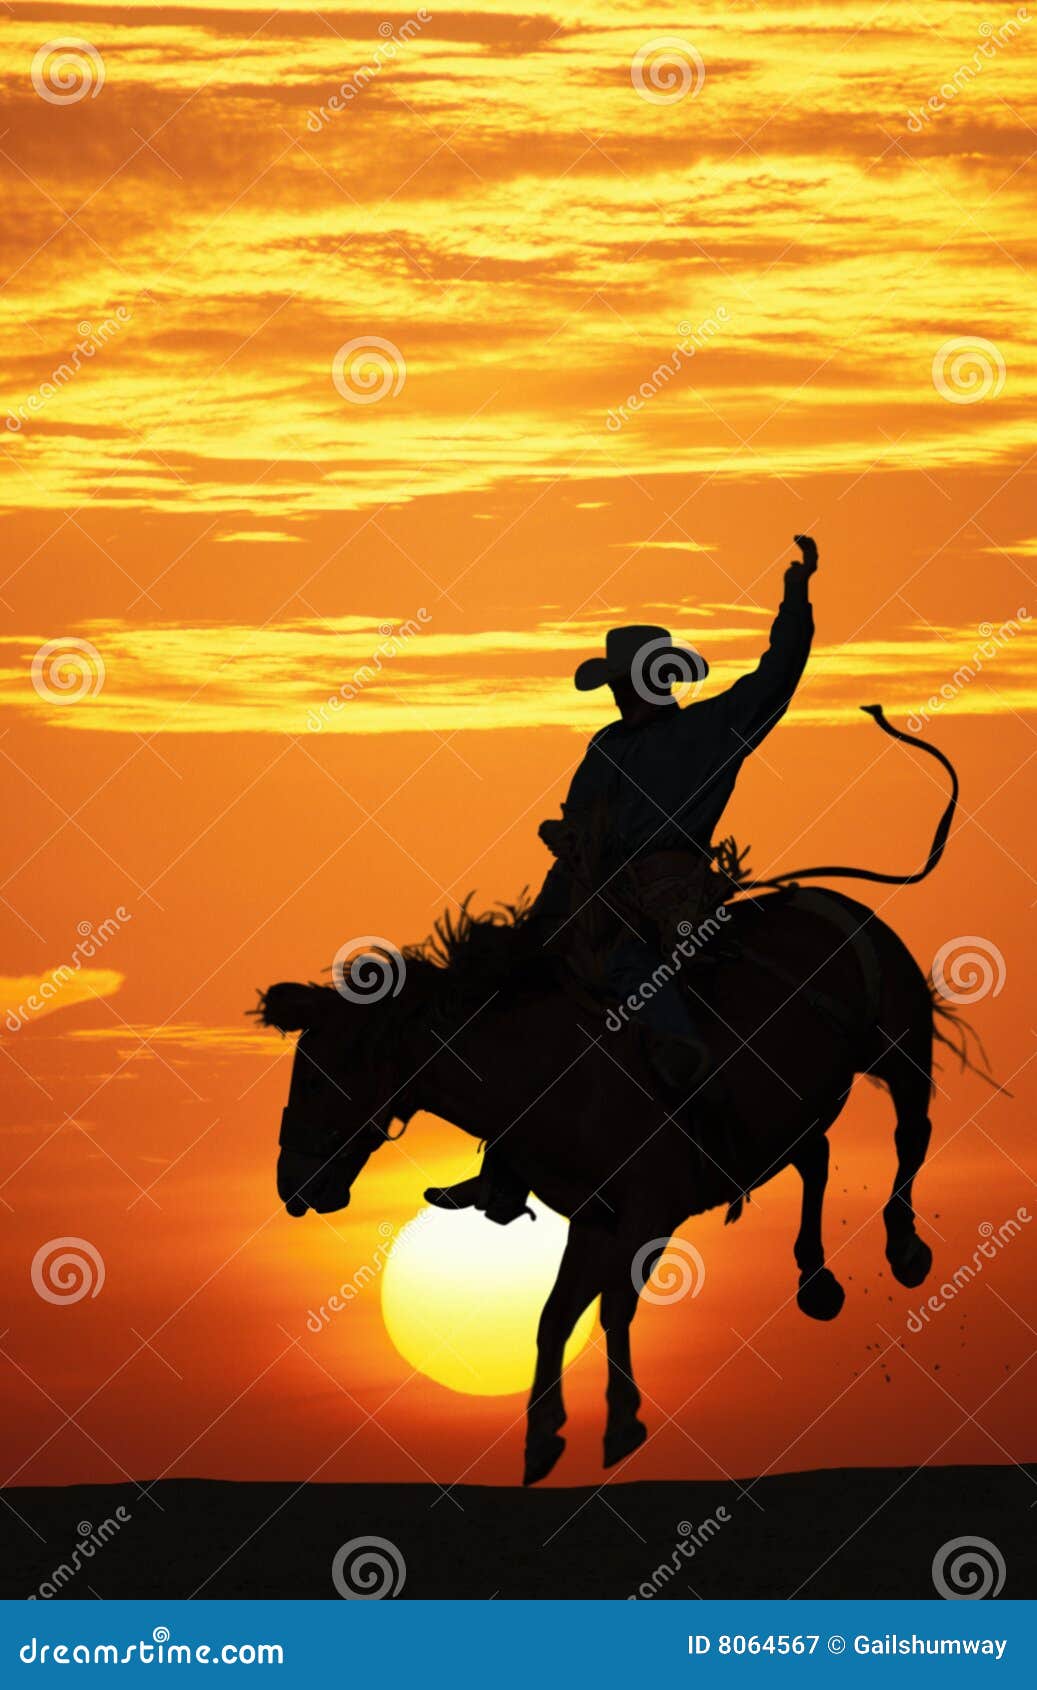 cowboy riding a bucking horse.